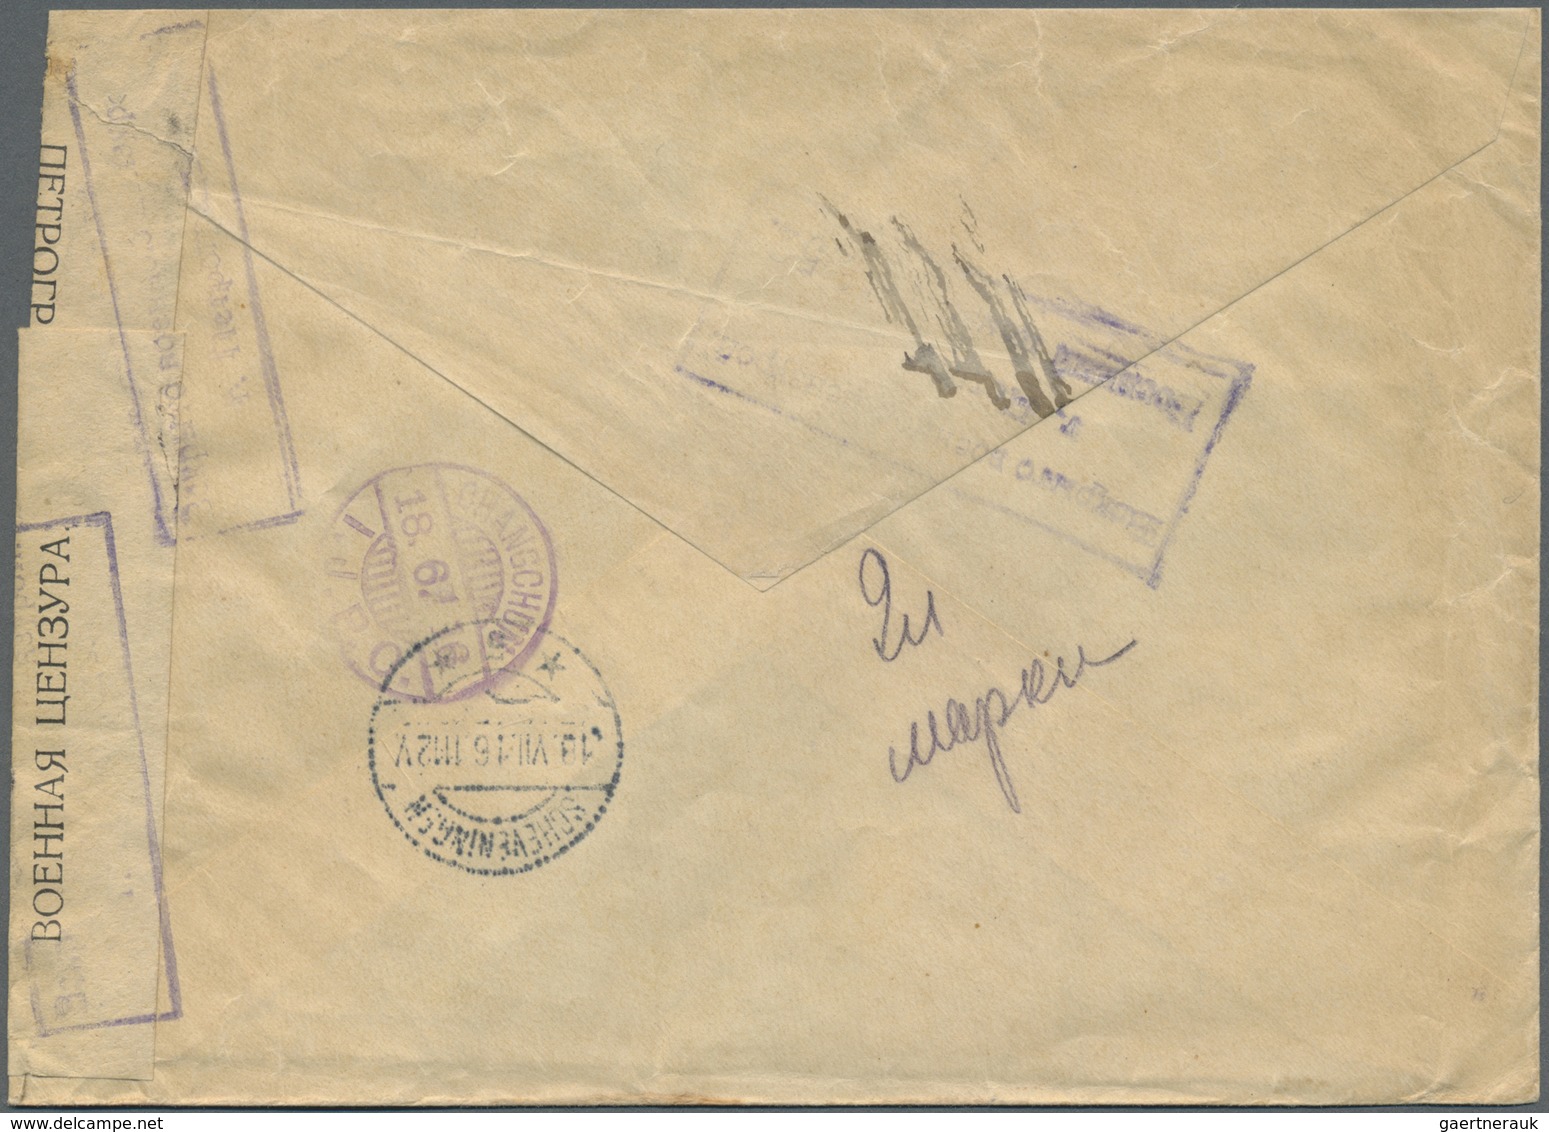 Br Japanische Post In China: 1916. Registered Envelope Addressed To Holland Bearing Japanese Post Offic - 1943-45 Shanghai & Nanking